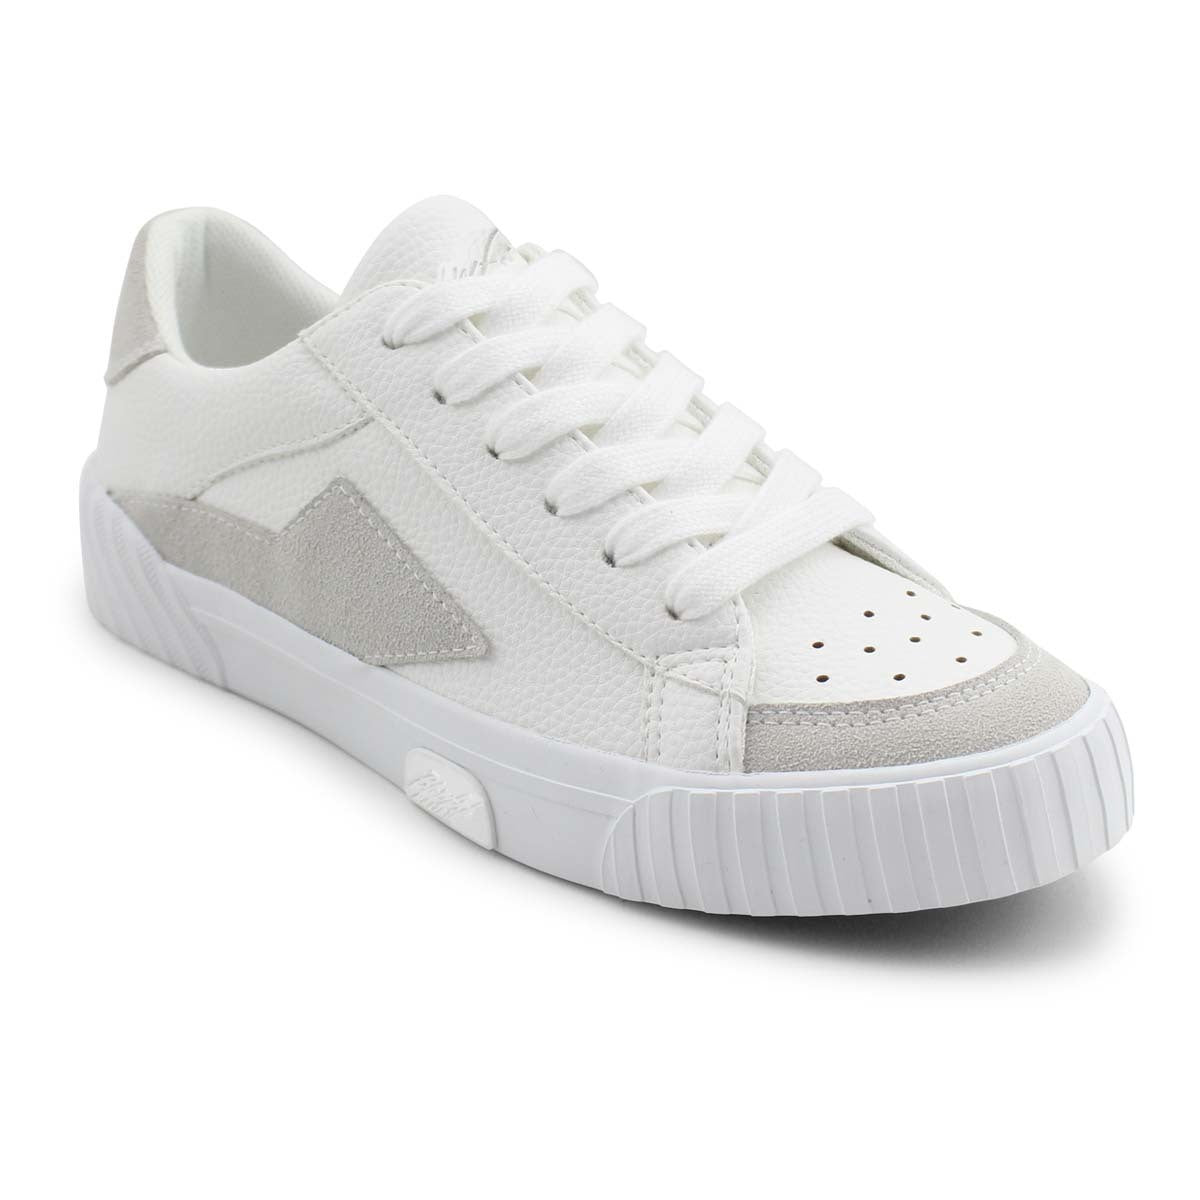 Blowfish Willa Sneaker - White & Light Gray